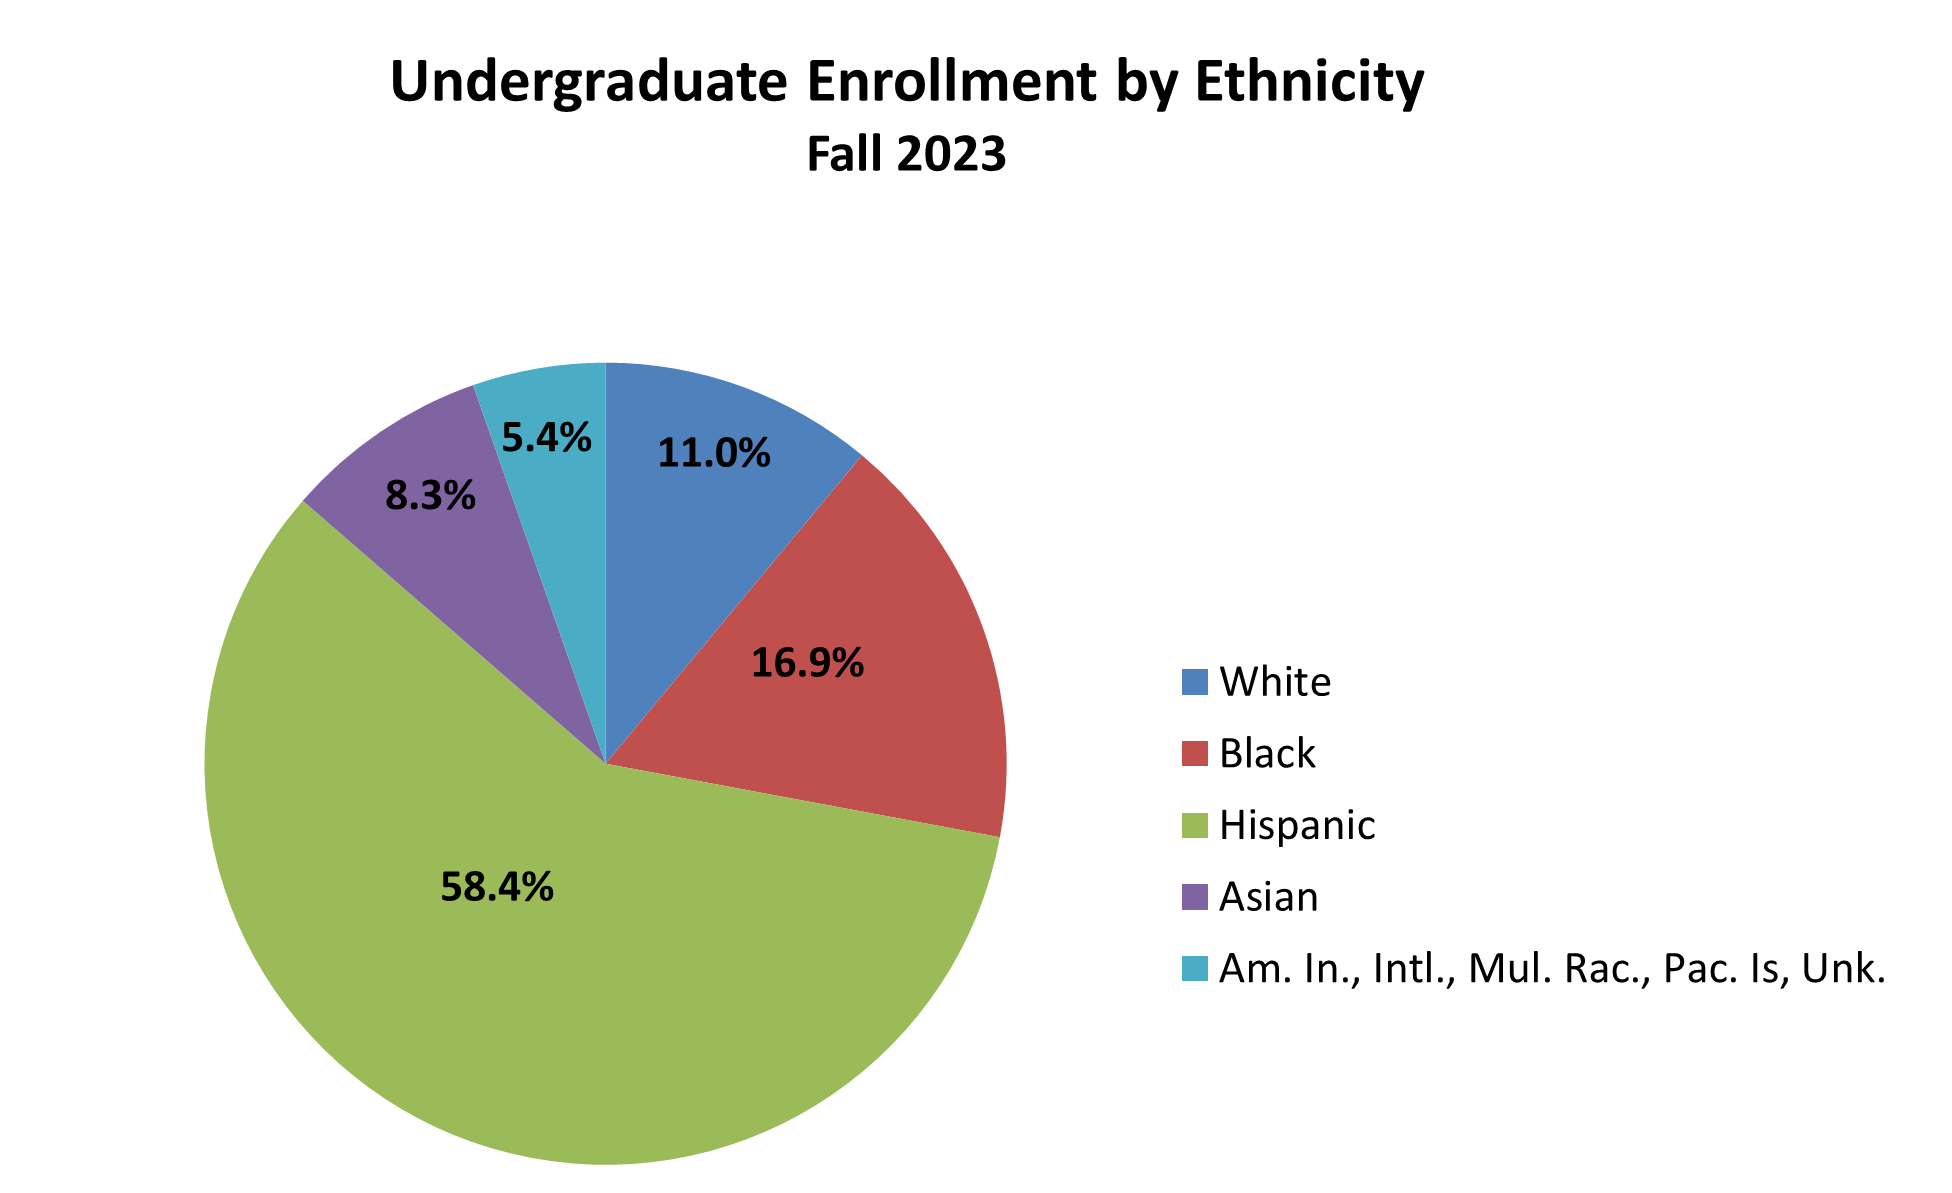 Undergraduate by ethnicity pie chart